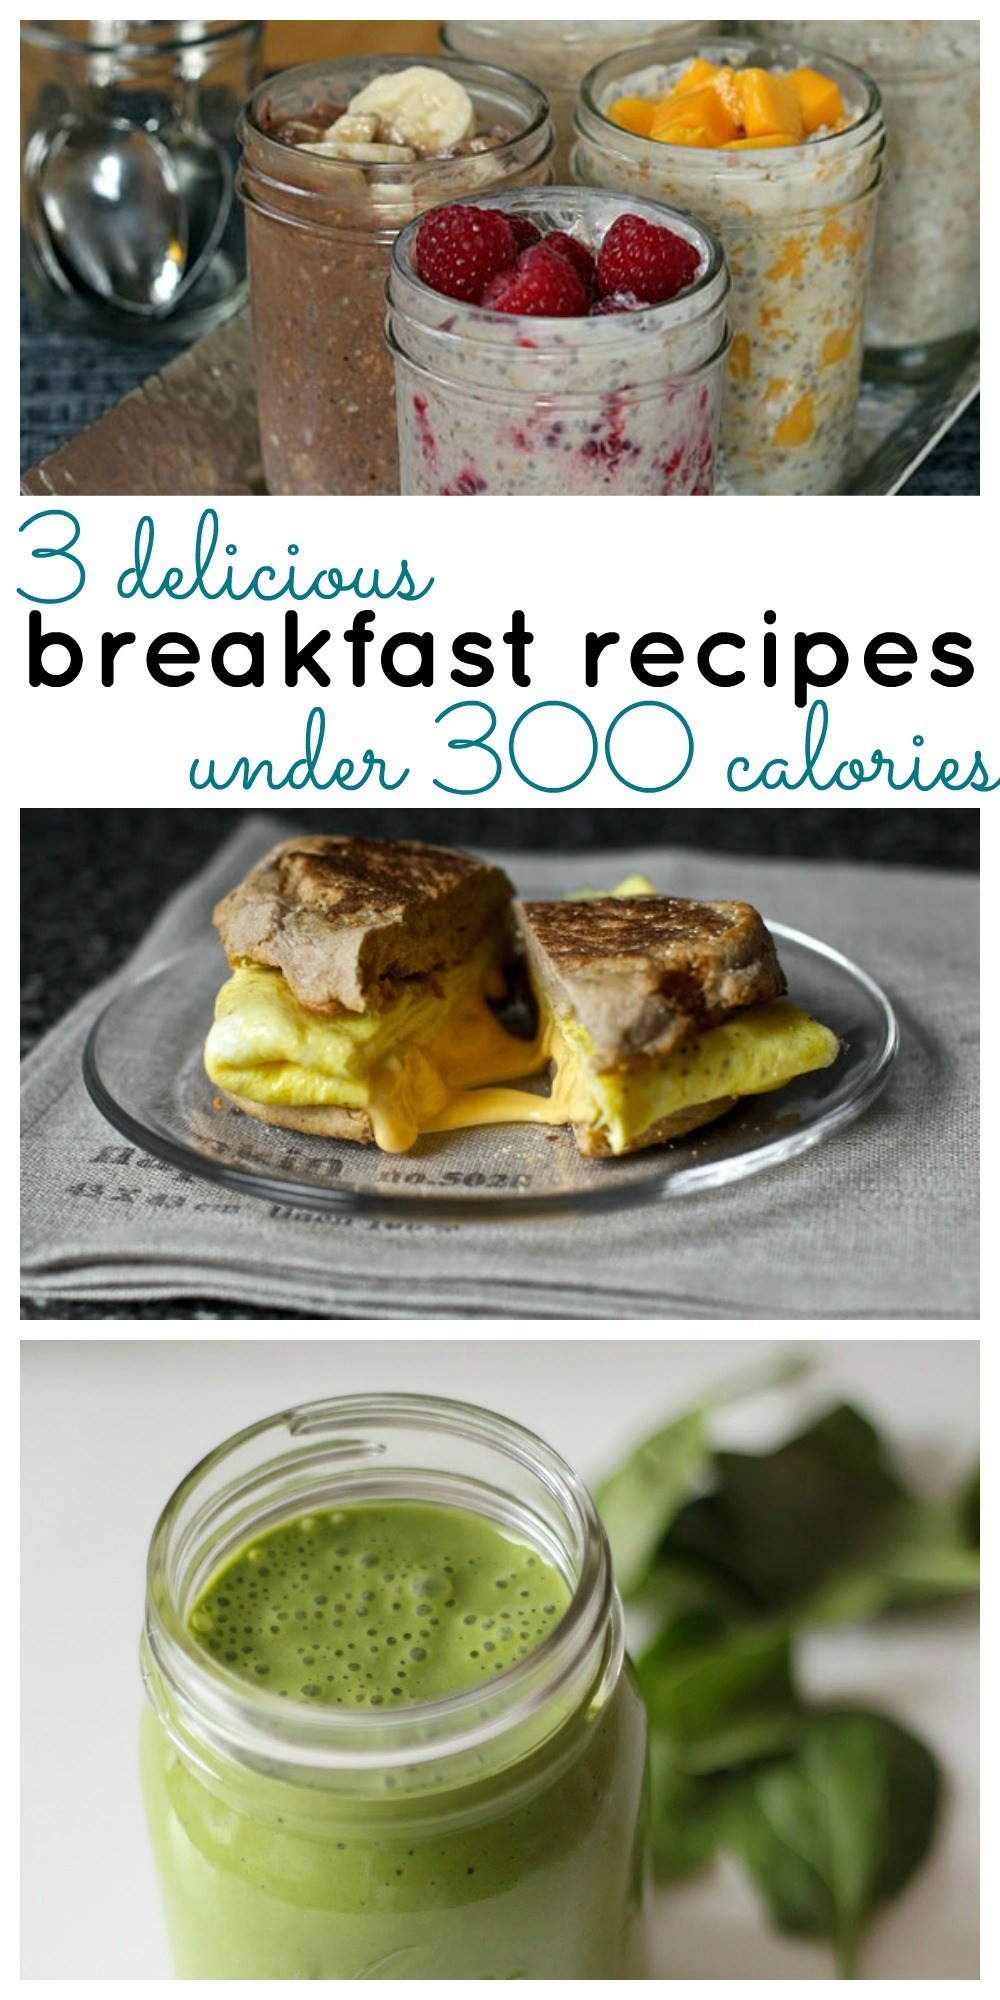 Delicious Low Calorie Recipes
 delicious low calorie breakfast recipes